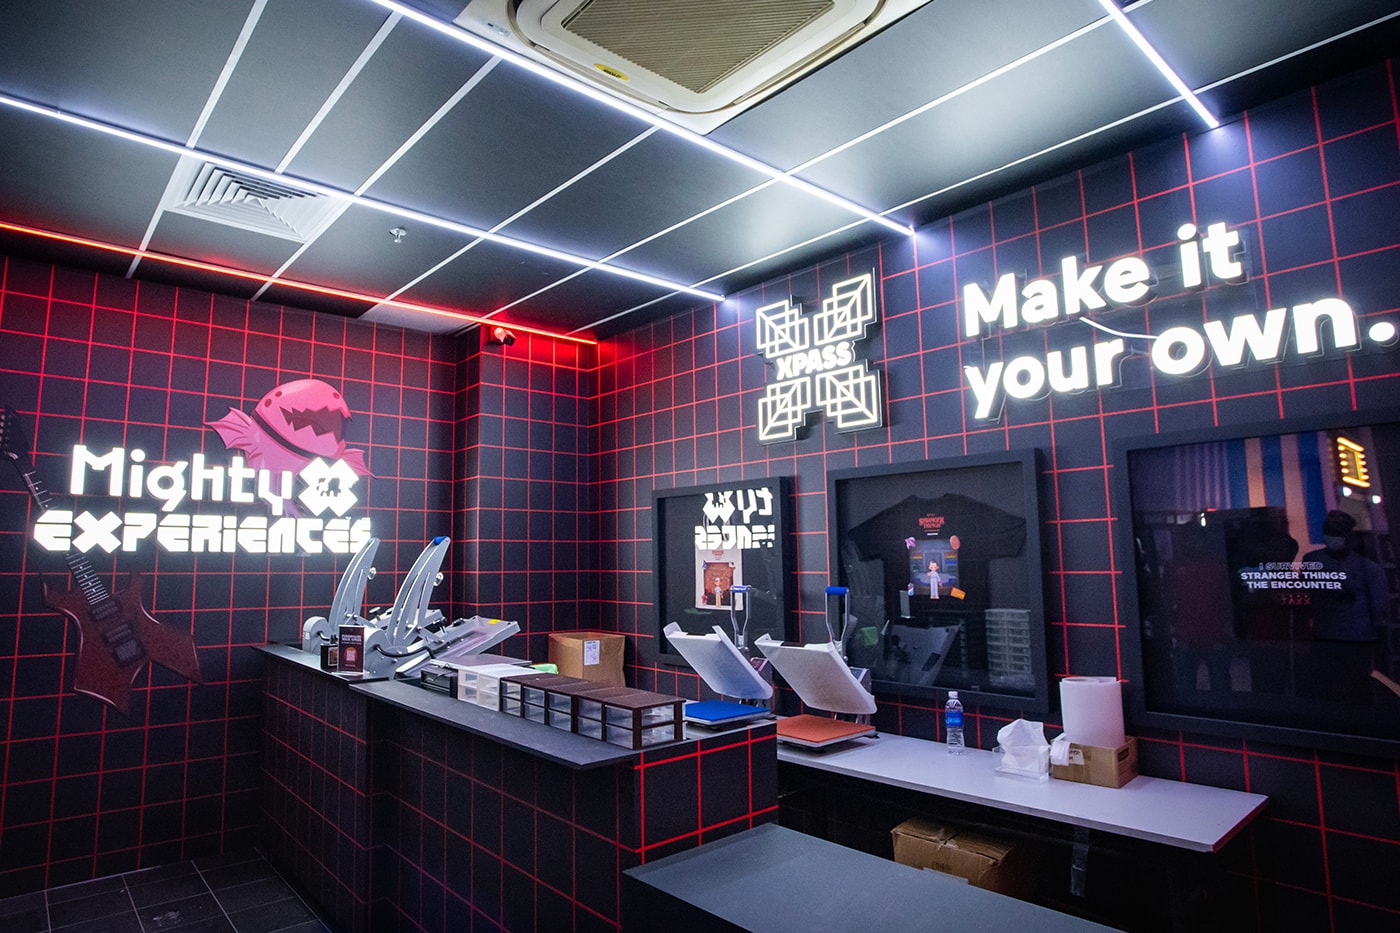 'Stranger Things' Immersive Retail Experience Mighty Jaxx Netflix Singapore Bugis+